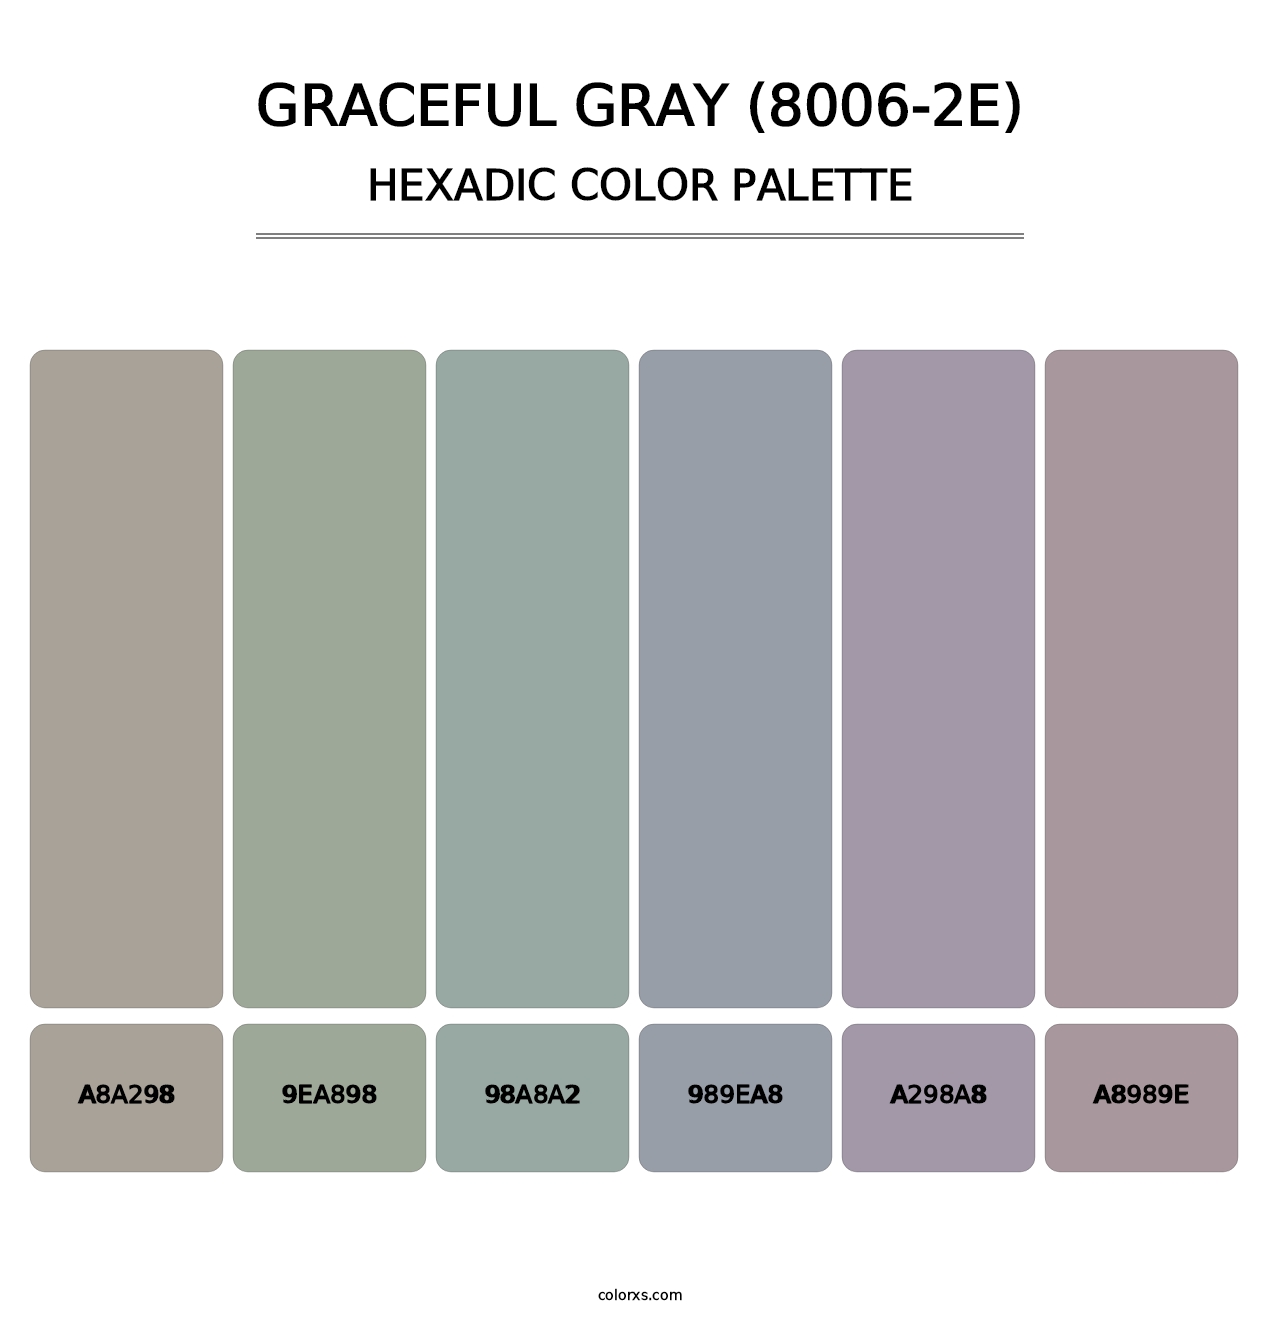 Graceful Gray (8006-2E) - Hexadic Color Palette